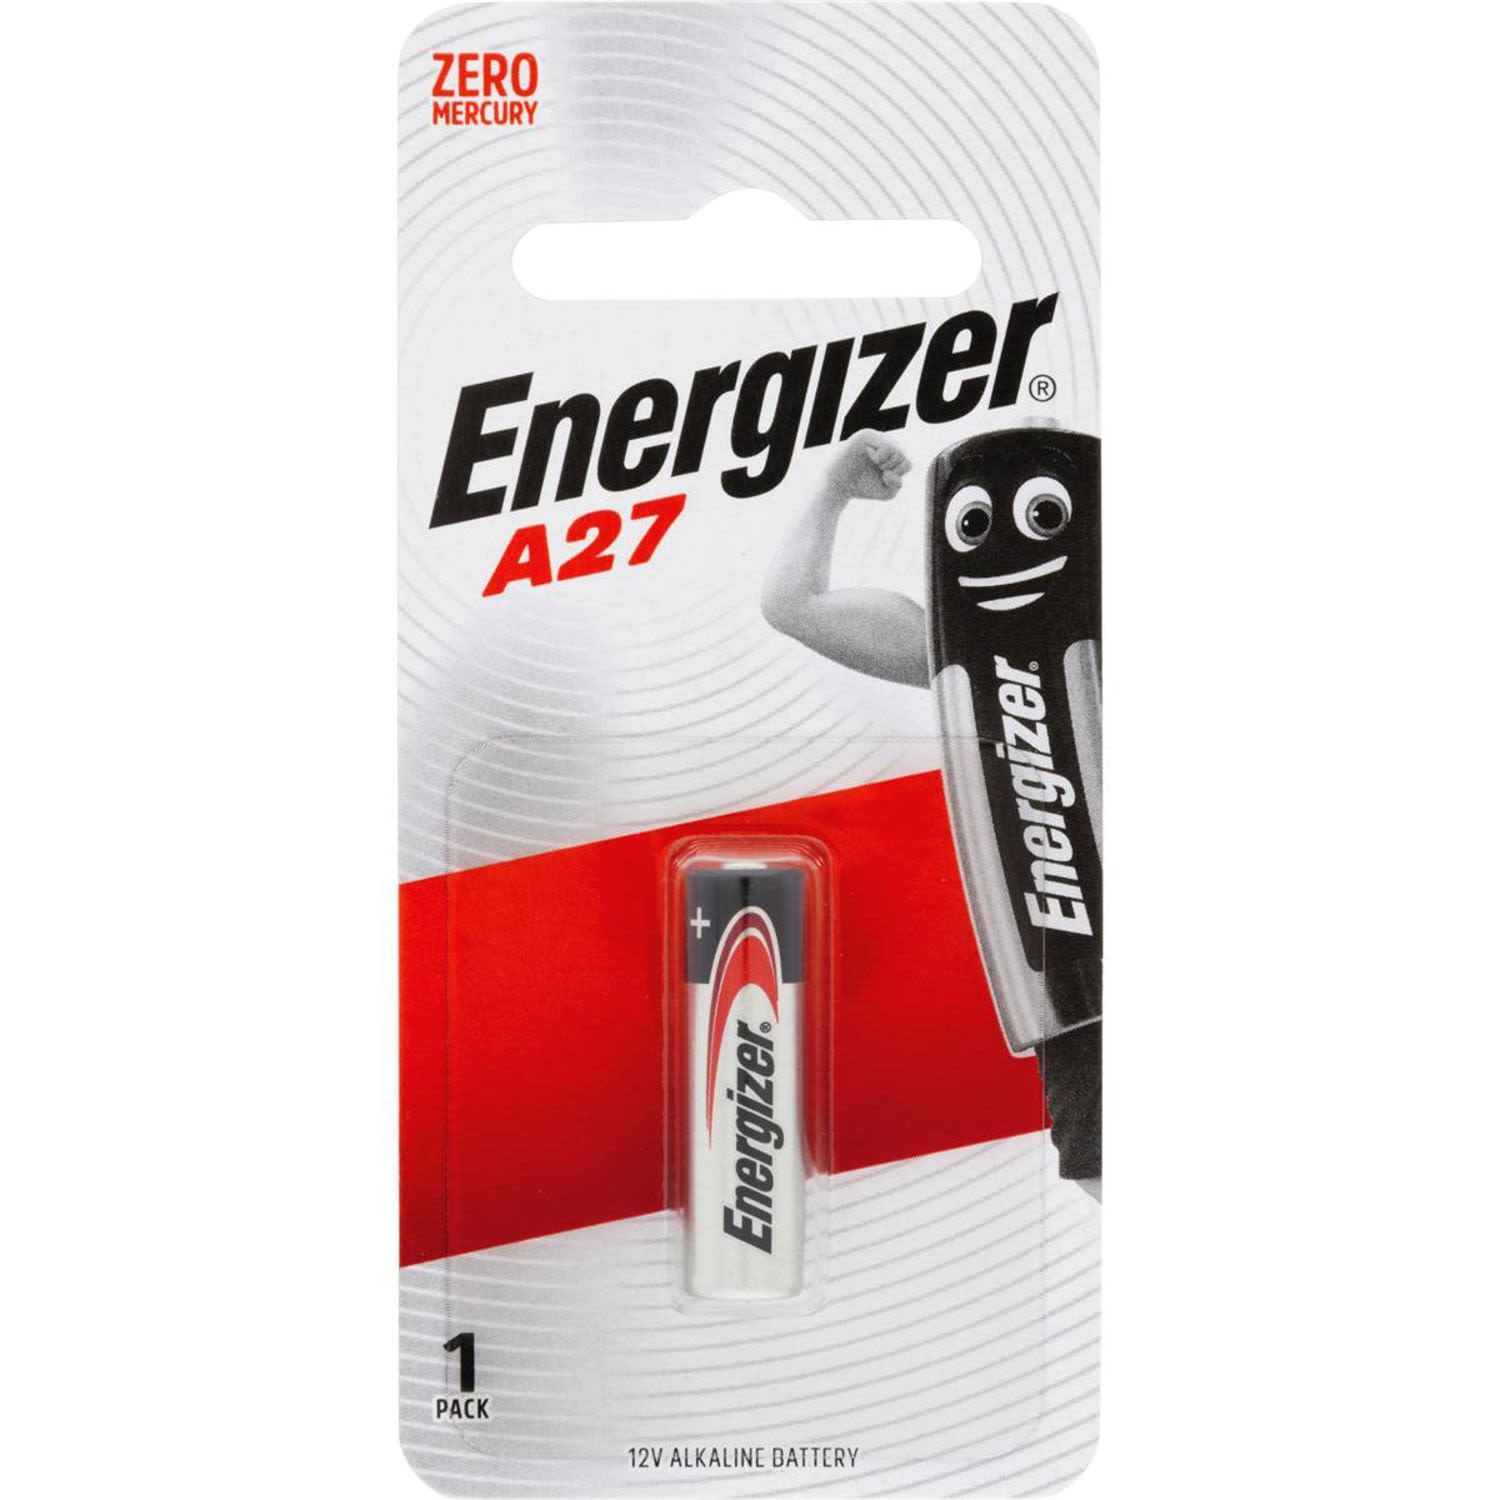 Energizer A27 Alkaline Battery, 1 Each